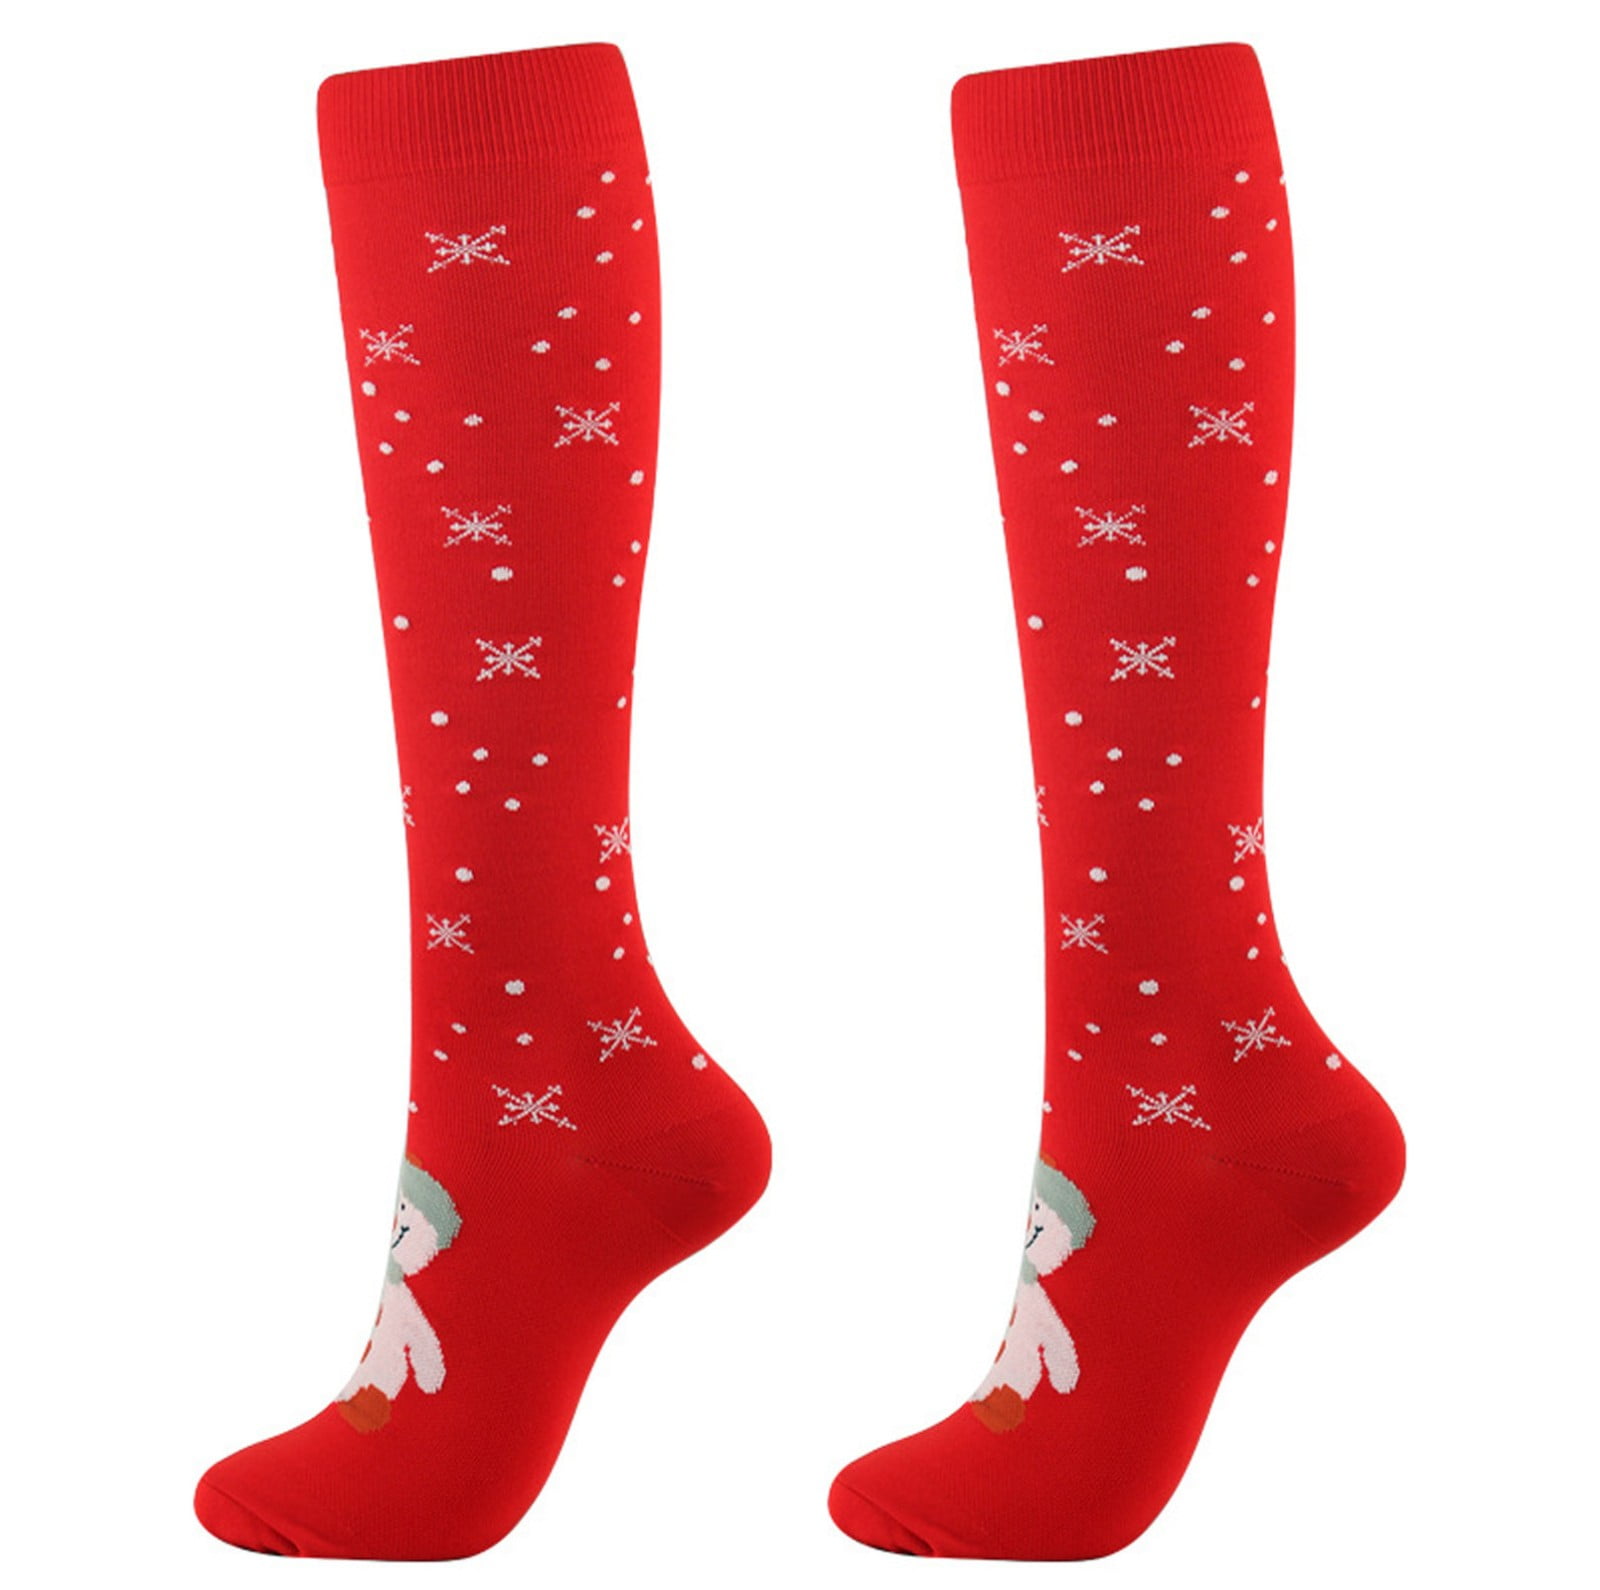 EGNMCR Compression Socks Unisex Adults Women Cartoon Christmas Print 3D ...